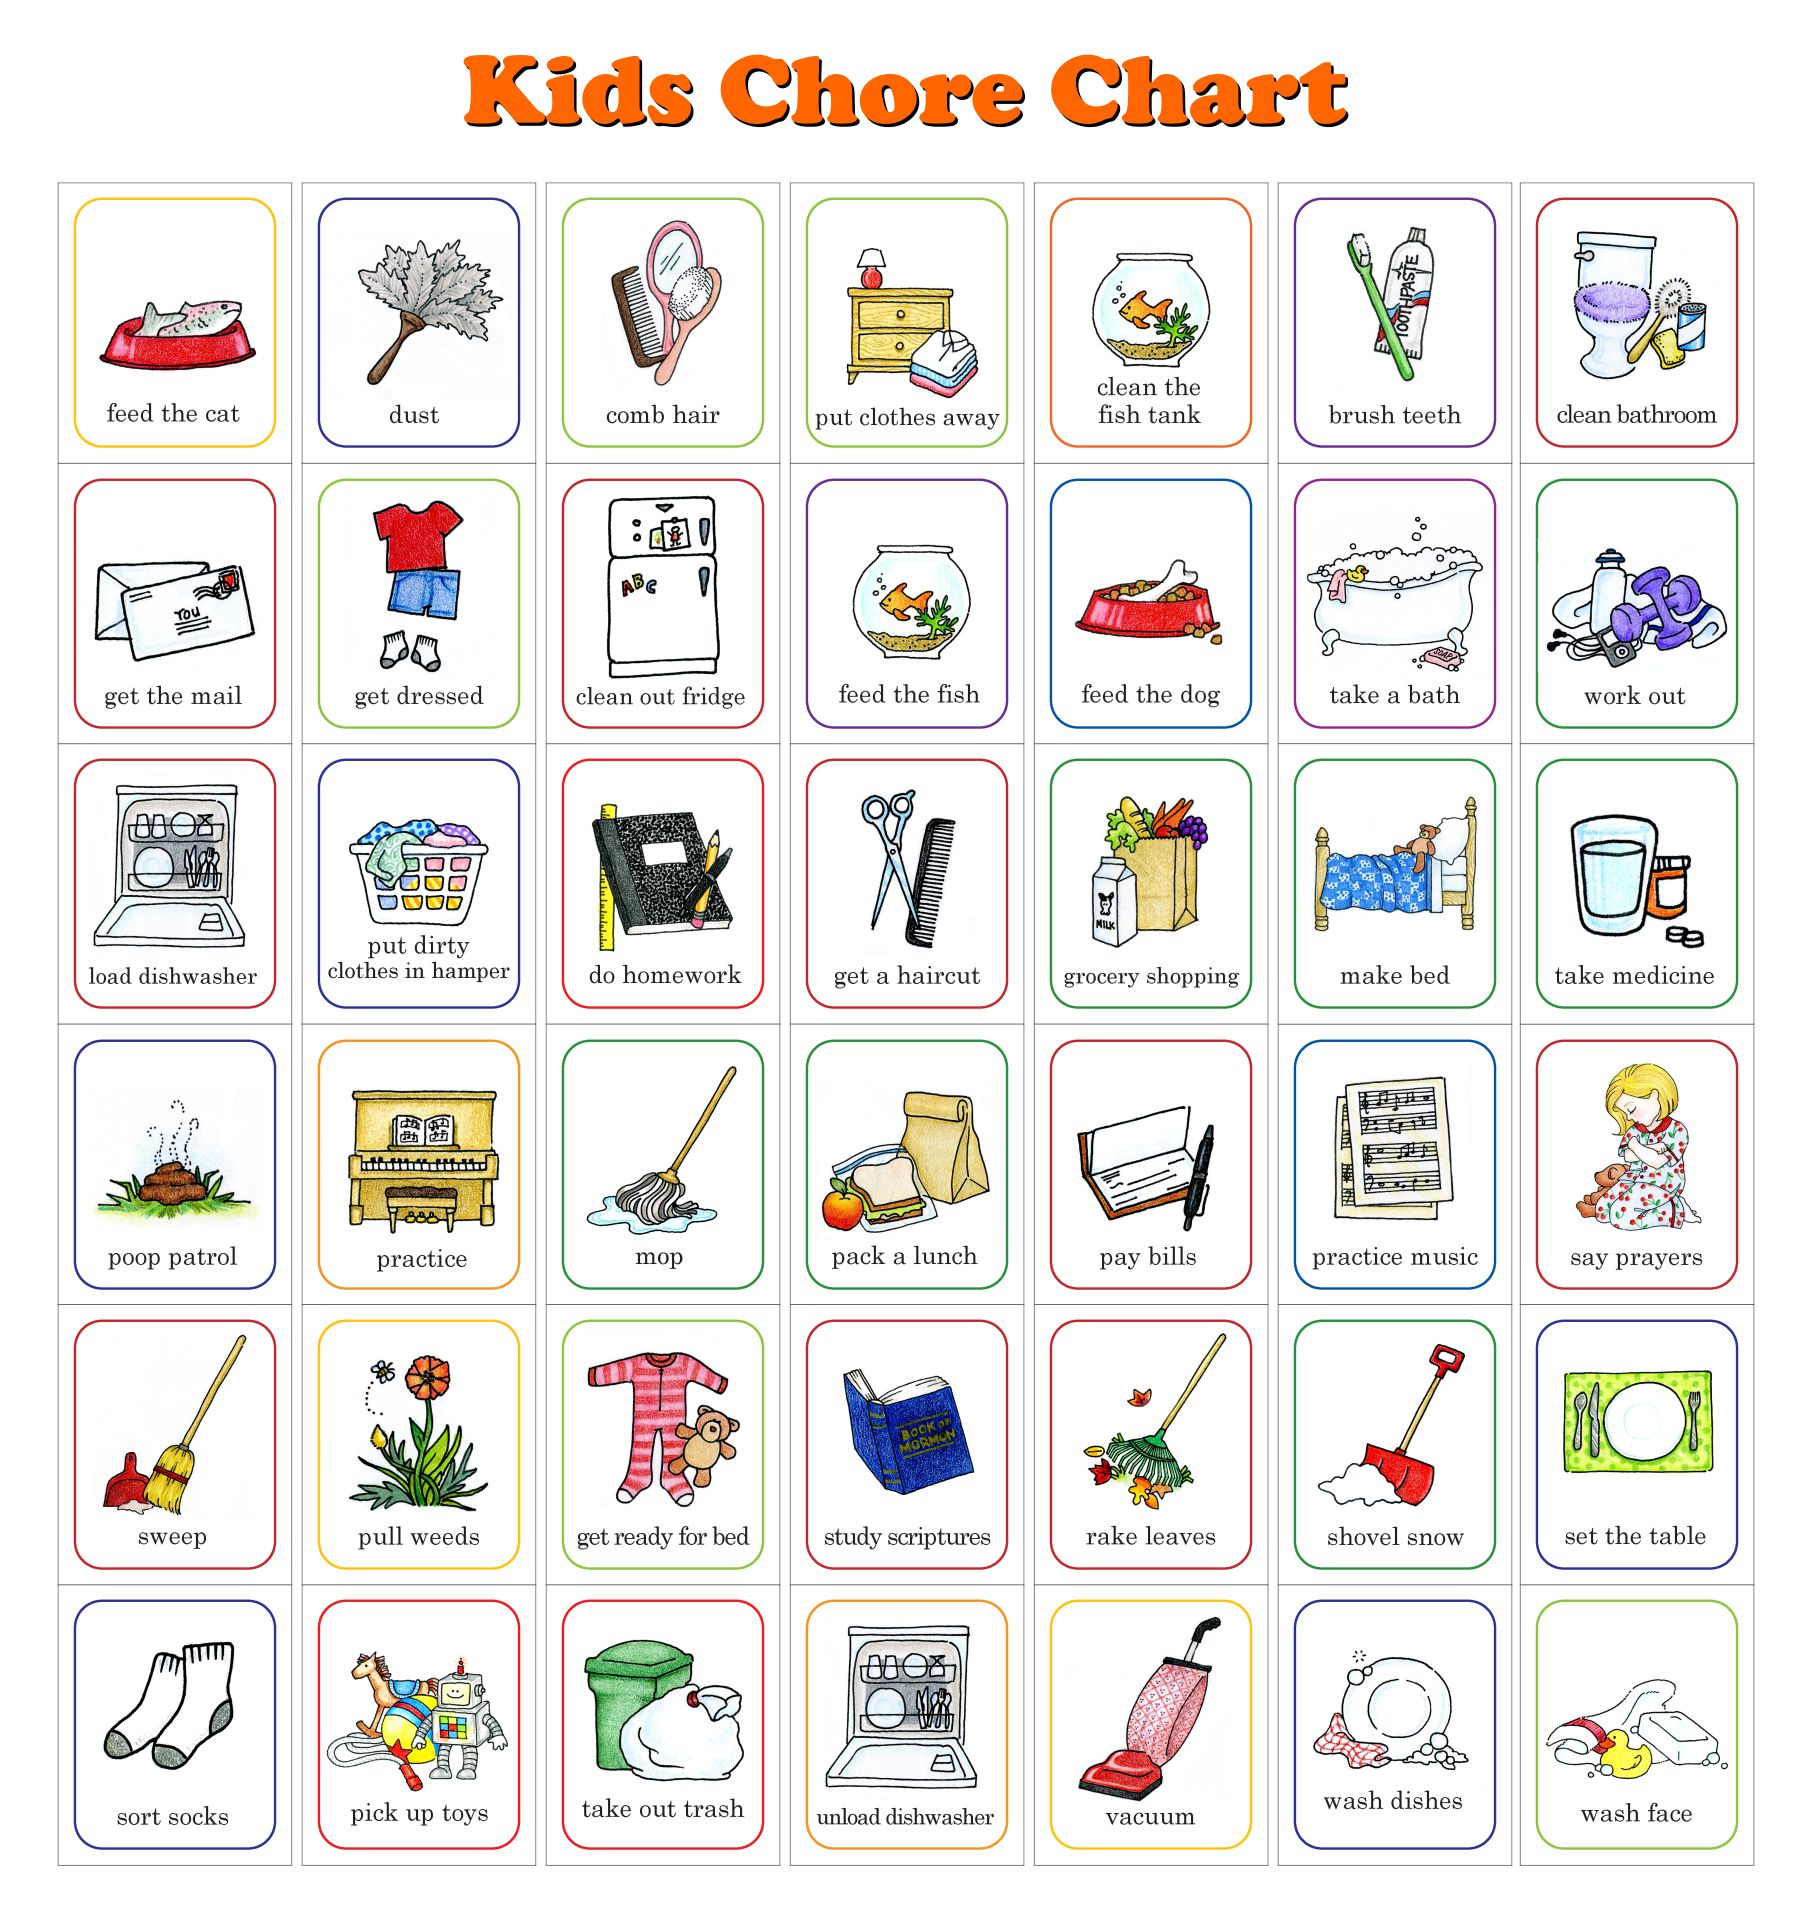 chore chart icons